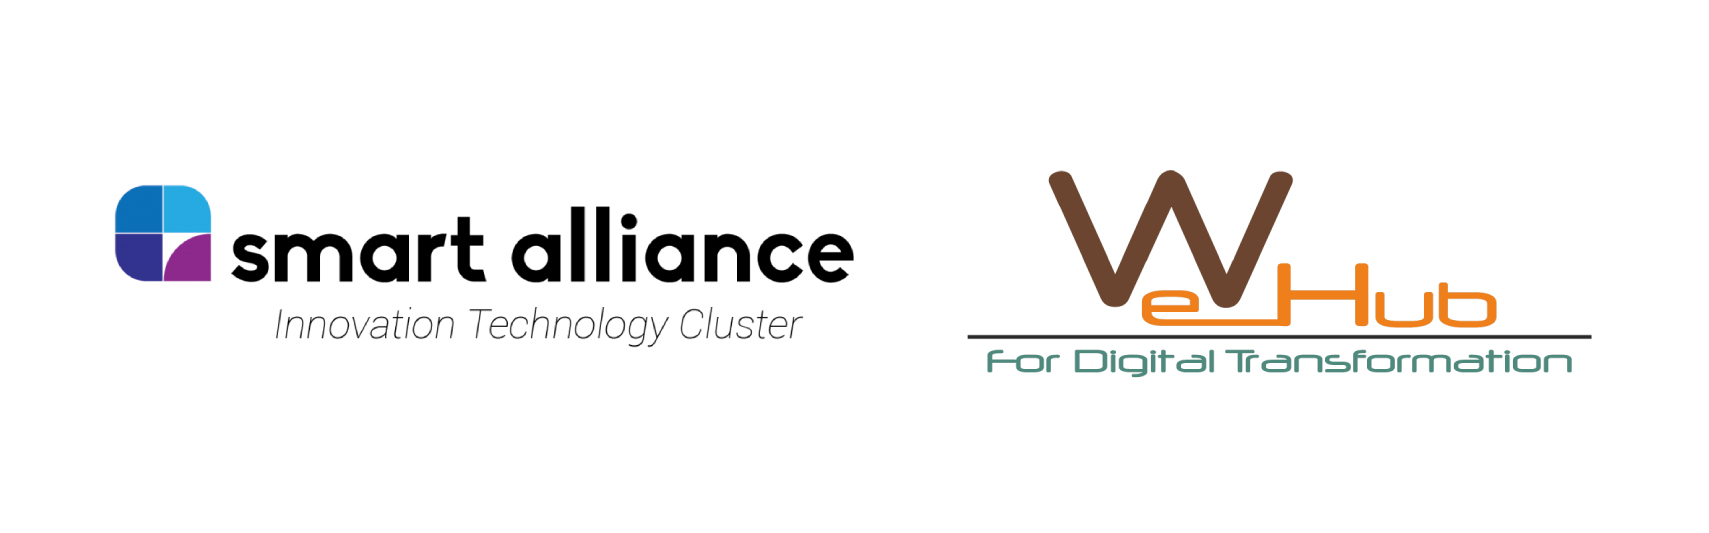 Smart Alliance a semnat un parteneriat cu Wallachia eHub